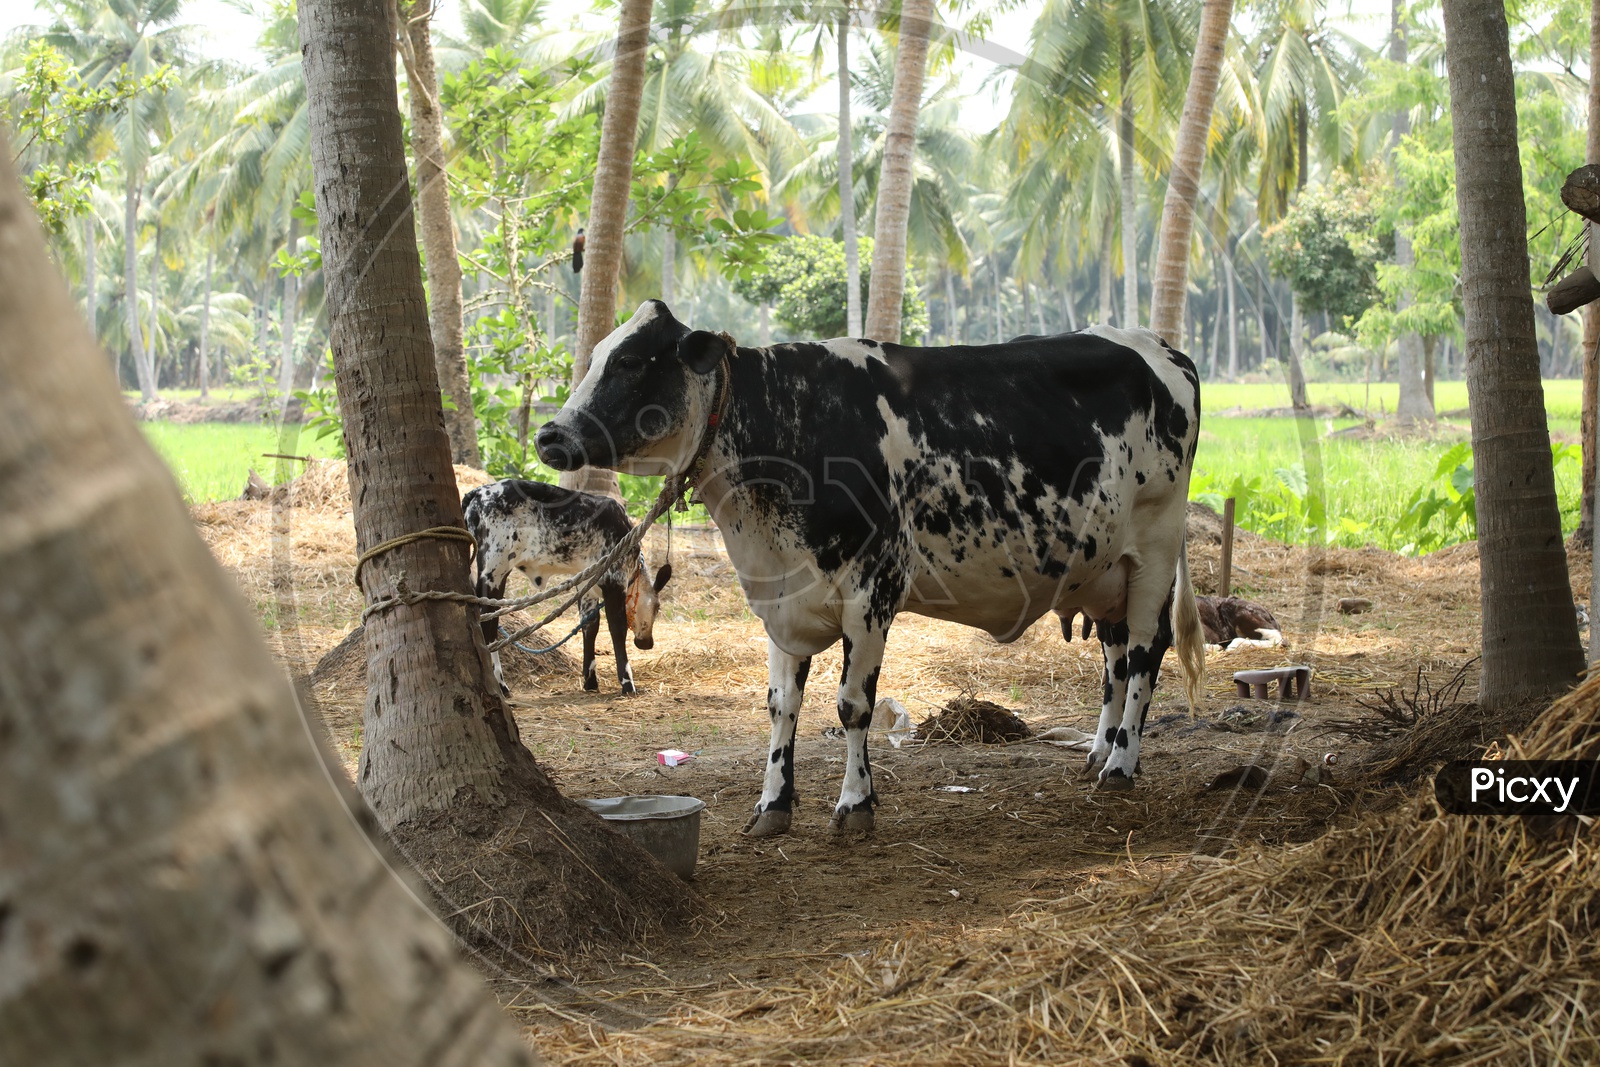 A Jersey Cow in a Rural Village Coconut Farm